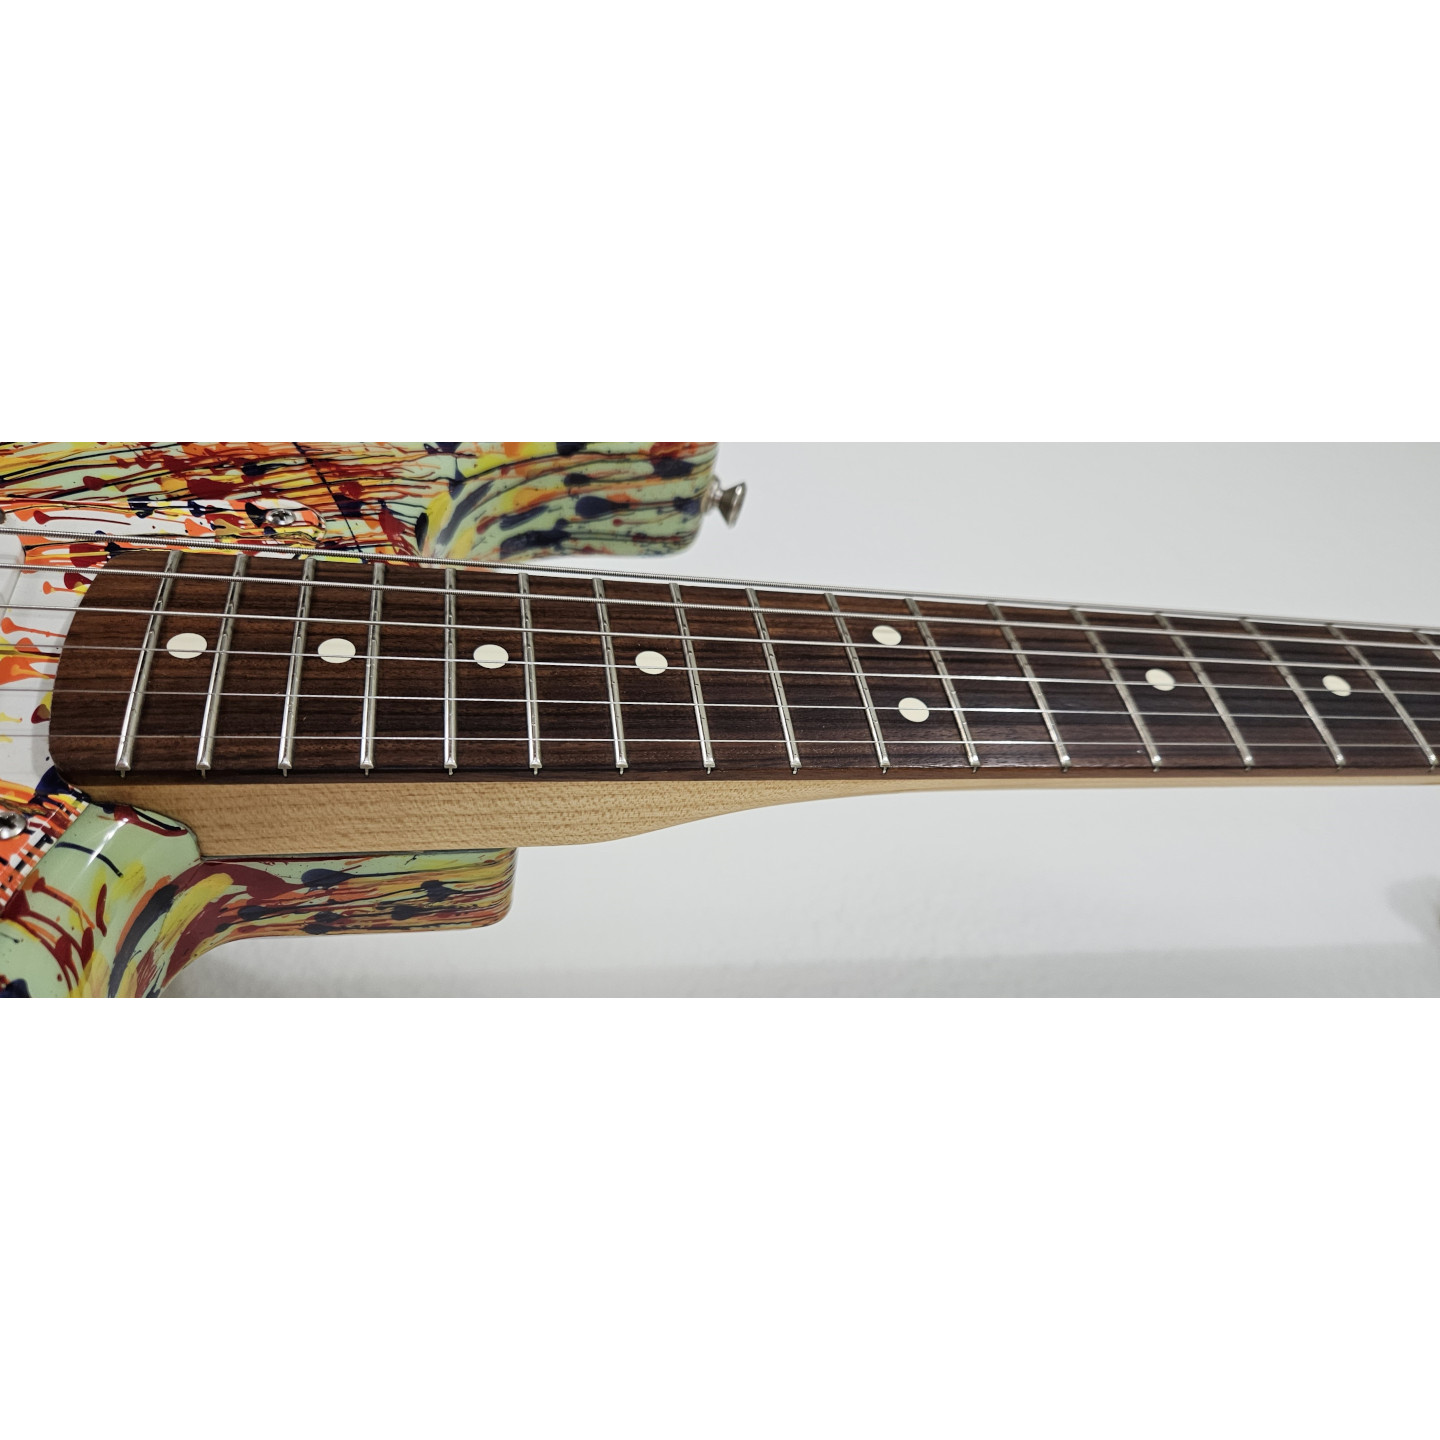 2003 Fender Splattercaster FSR Standard Stratocaster Surf Green Electric Guitar